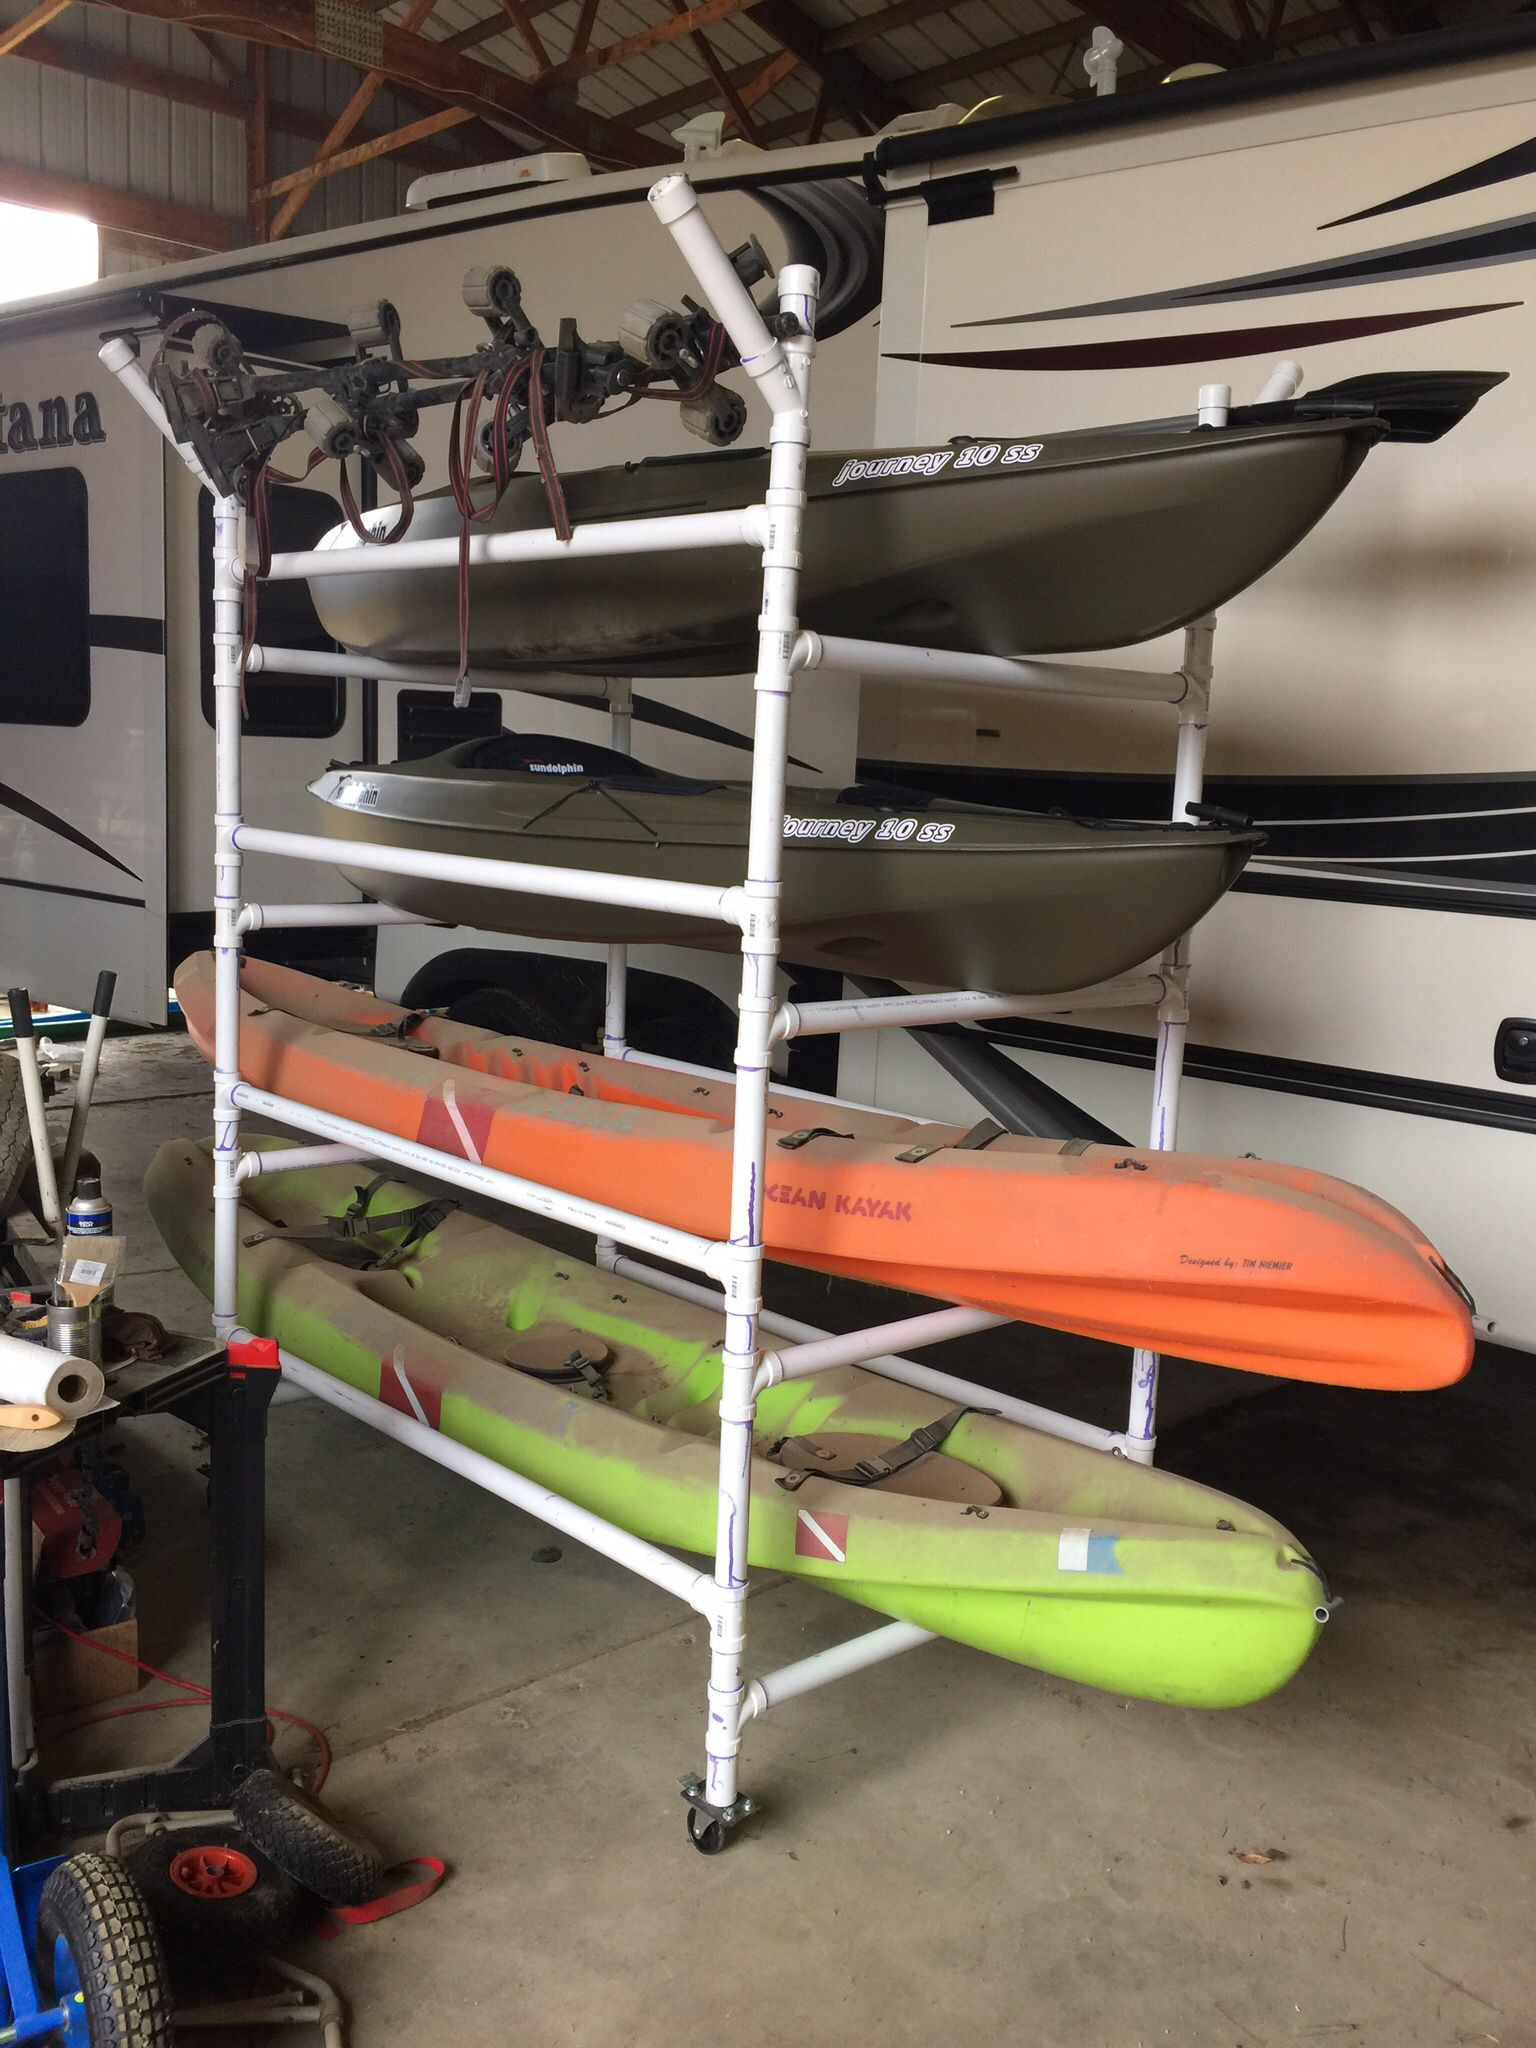 Best ideas about DIY Kayak Storage Rack
. Save or Pin Homemade PVC kayak rack can store 4 kayaks paddles Now.